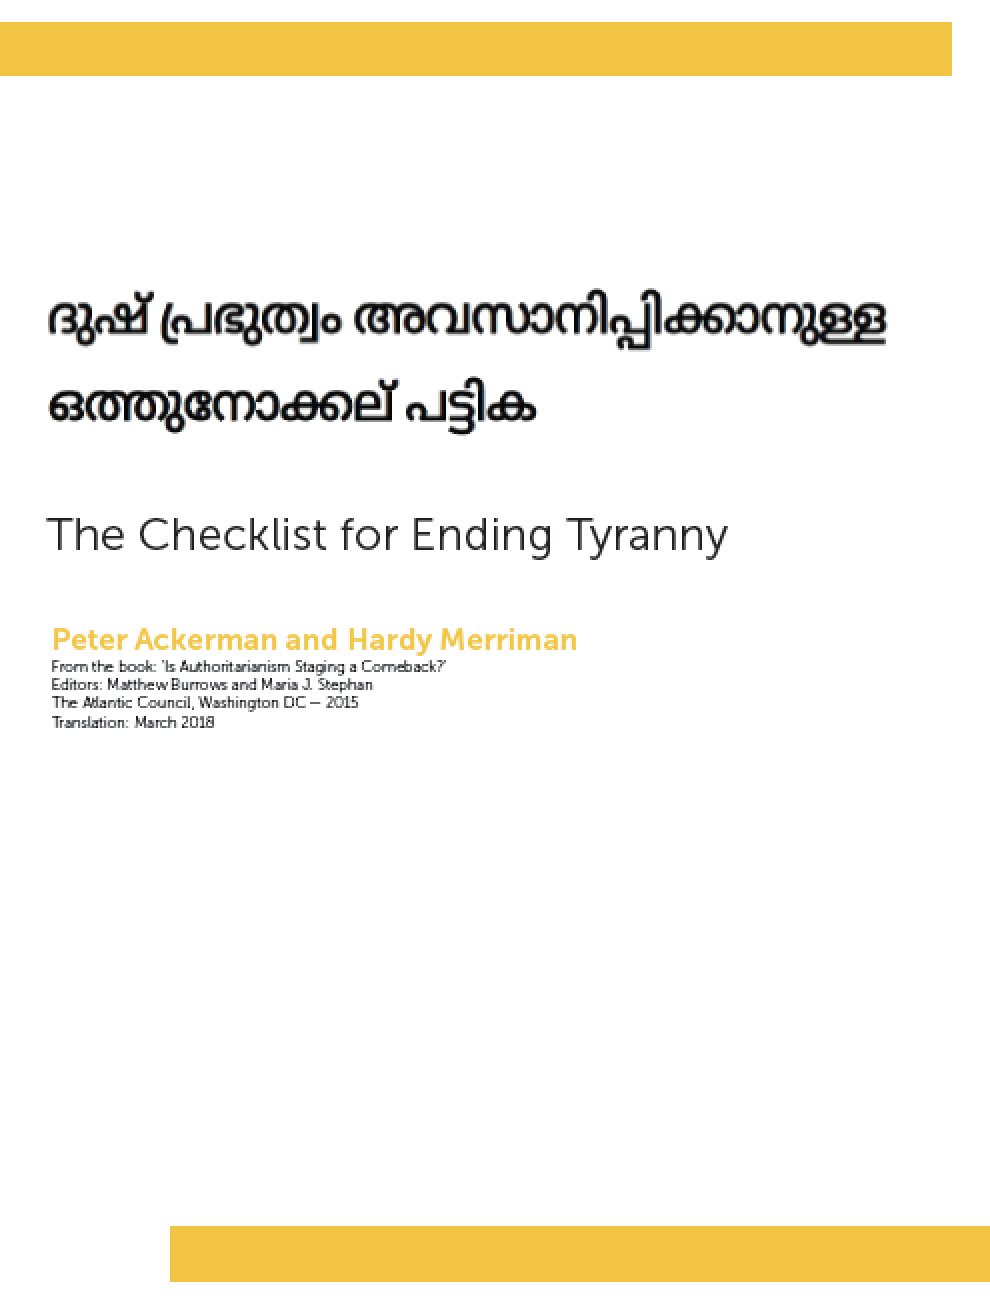 The Checklist for Ending Tyranny (Malayalam)